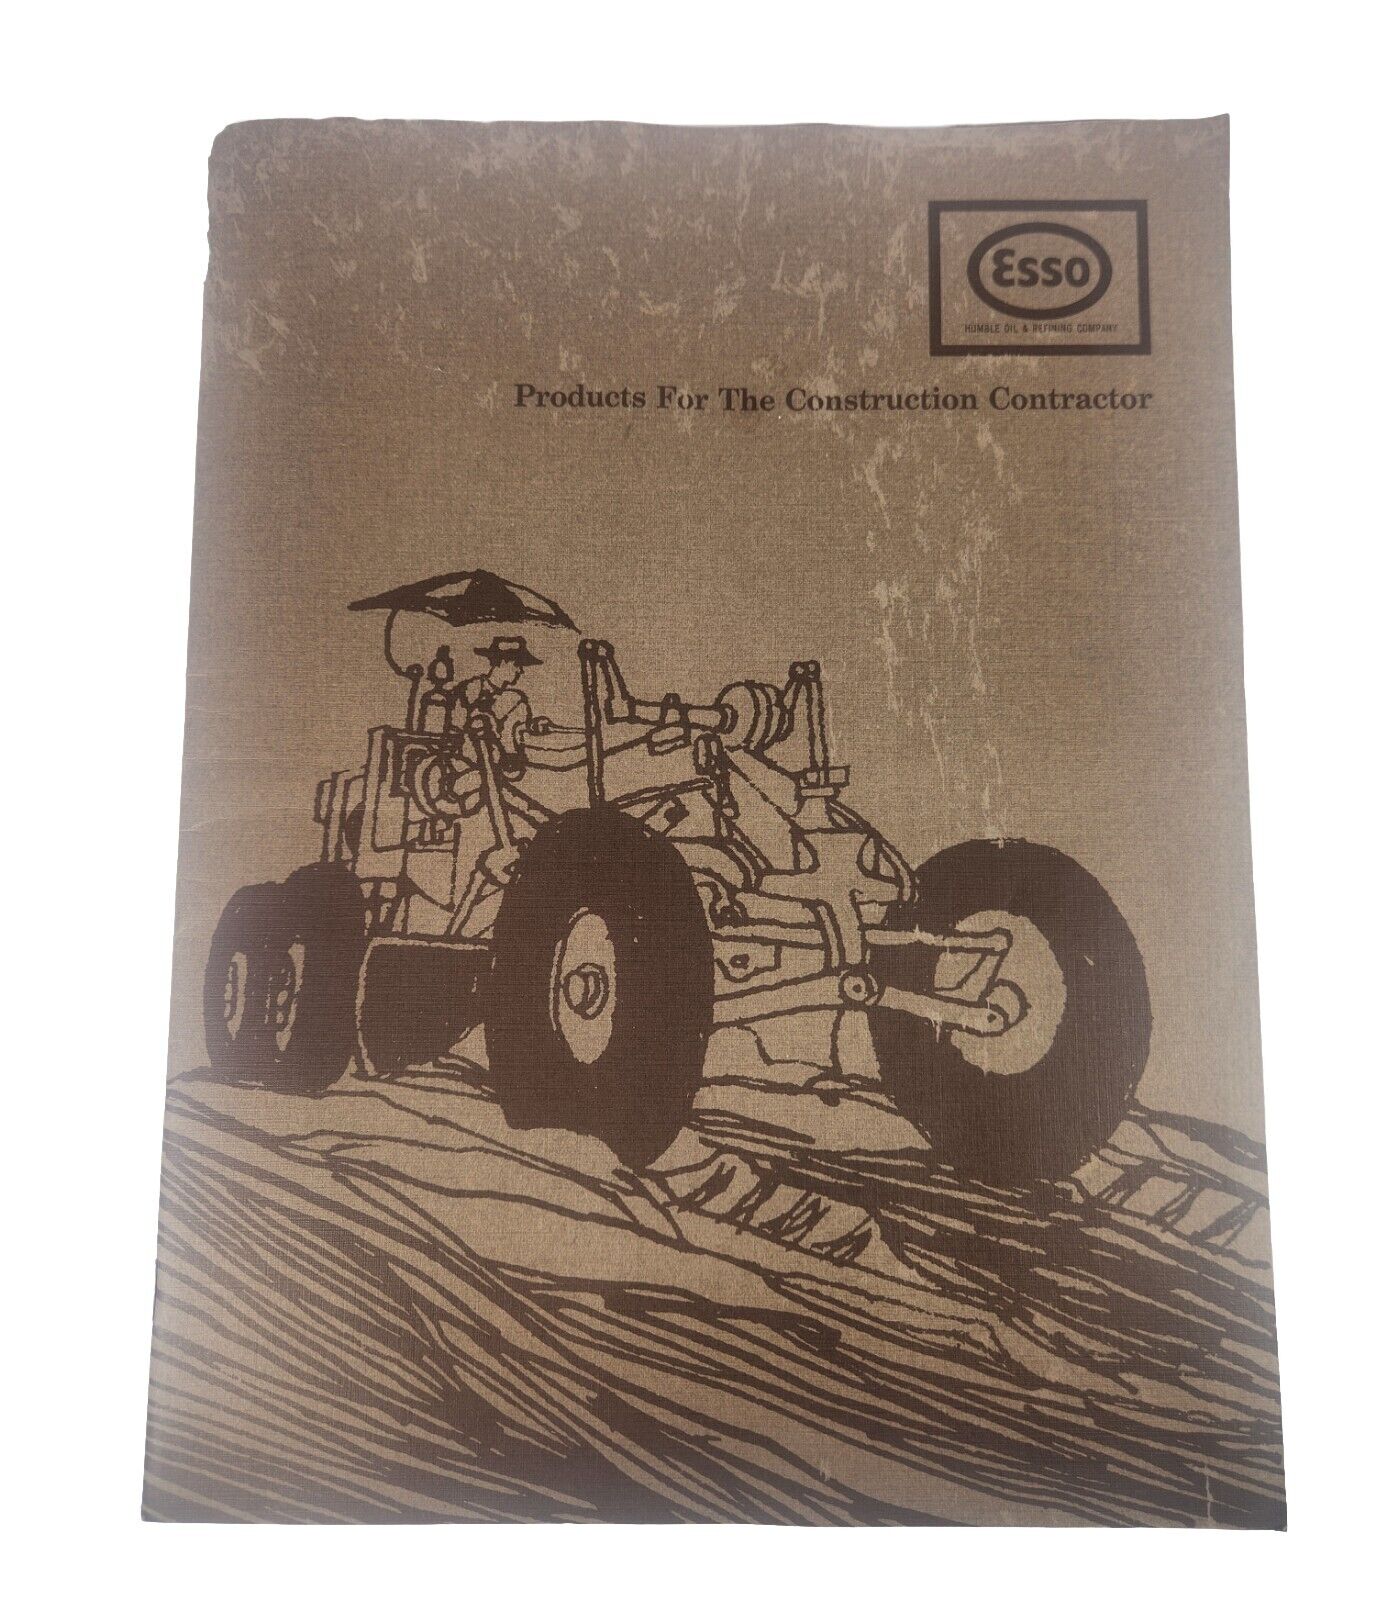 1965 Enco, Homble oil co. products for construction contractors catalogue